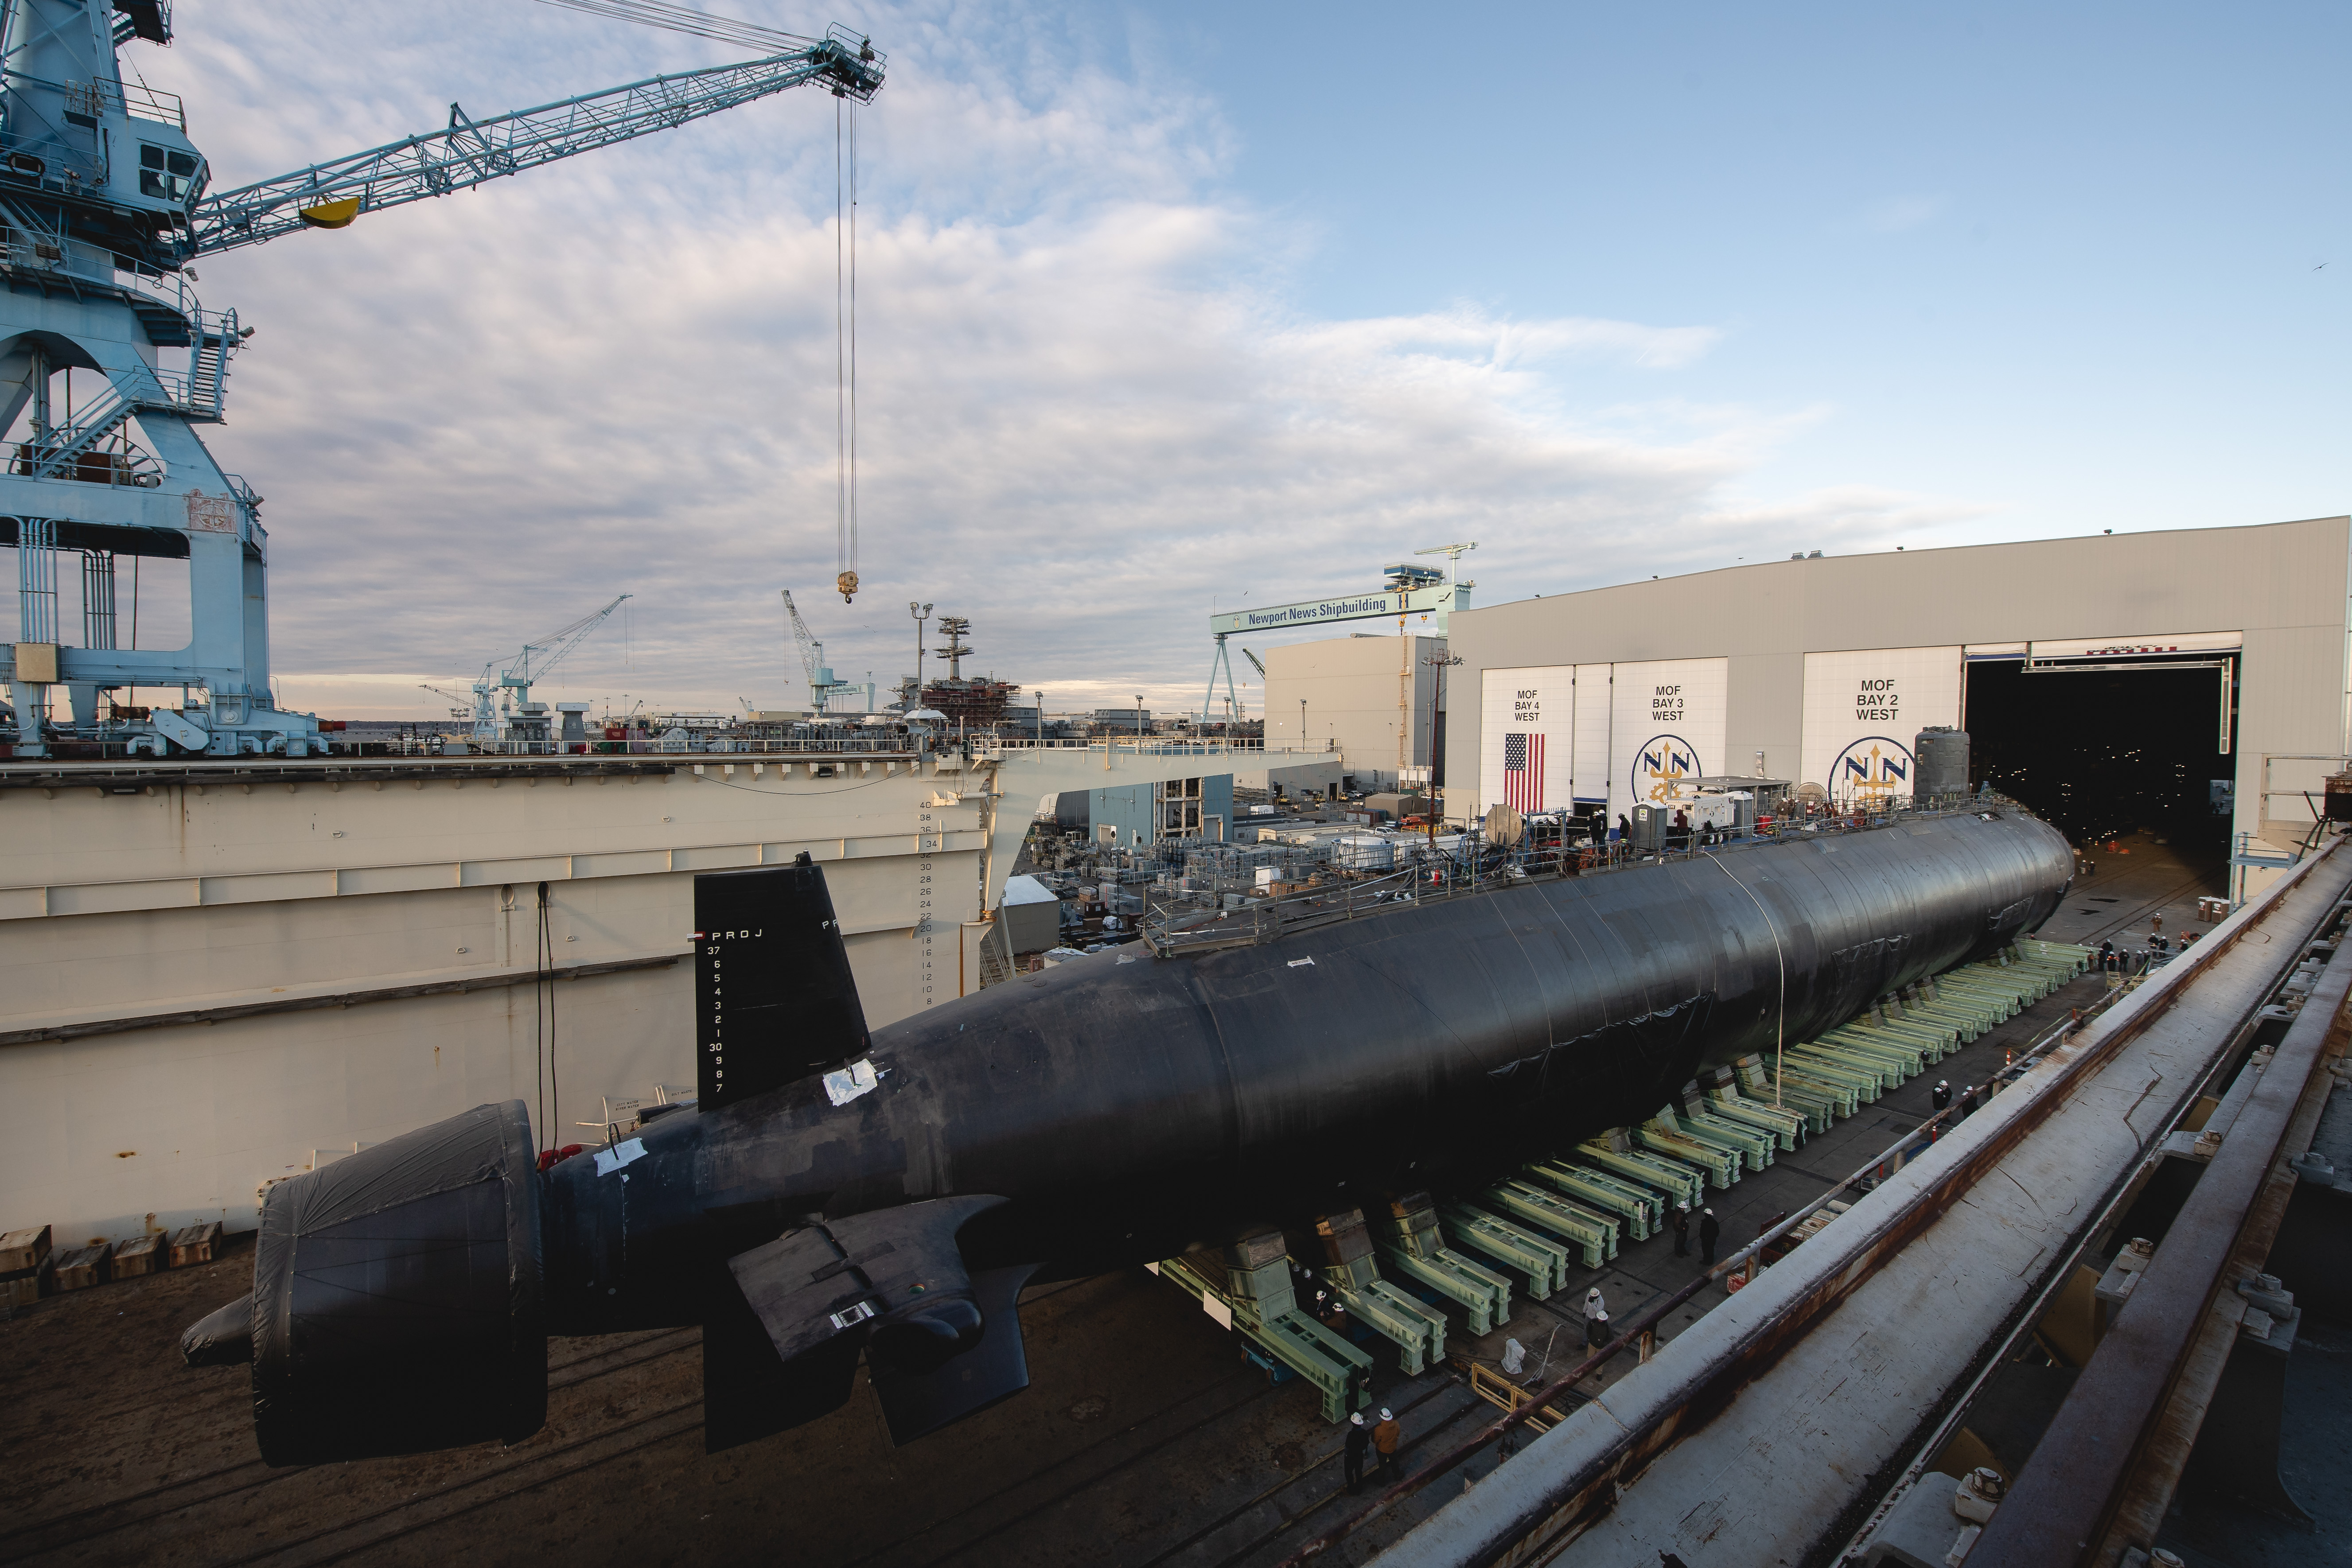 HII Launches Virginia-class Submarine Massachusetts (SSN 798) at Newport News Shipbuilding